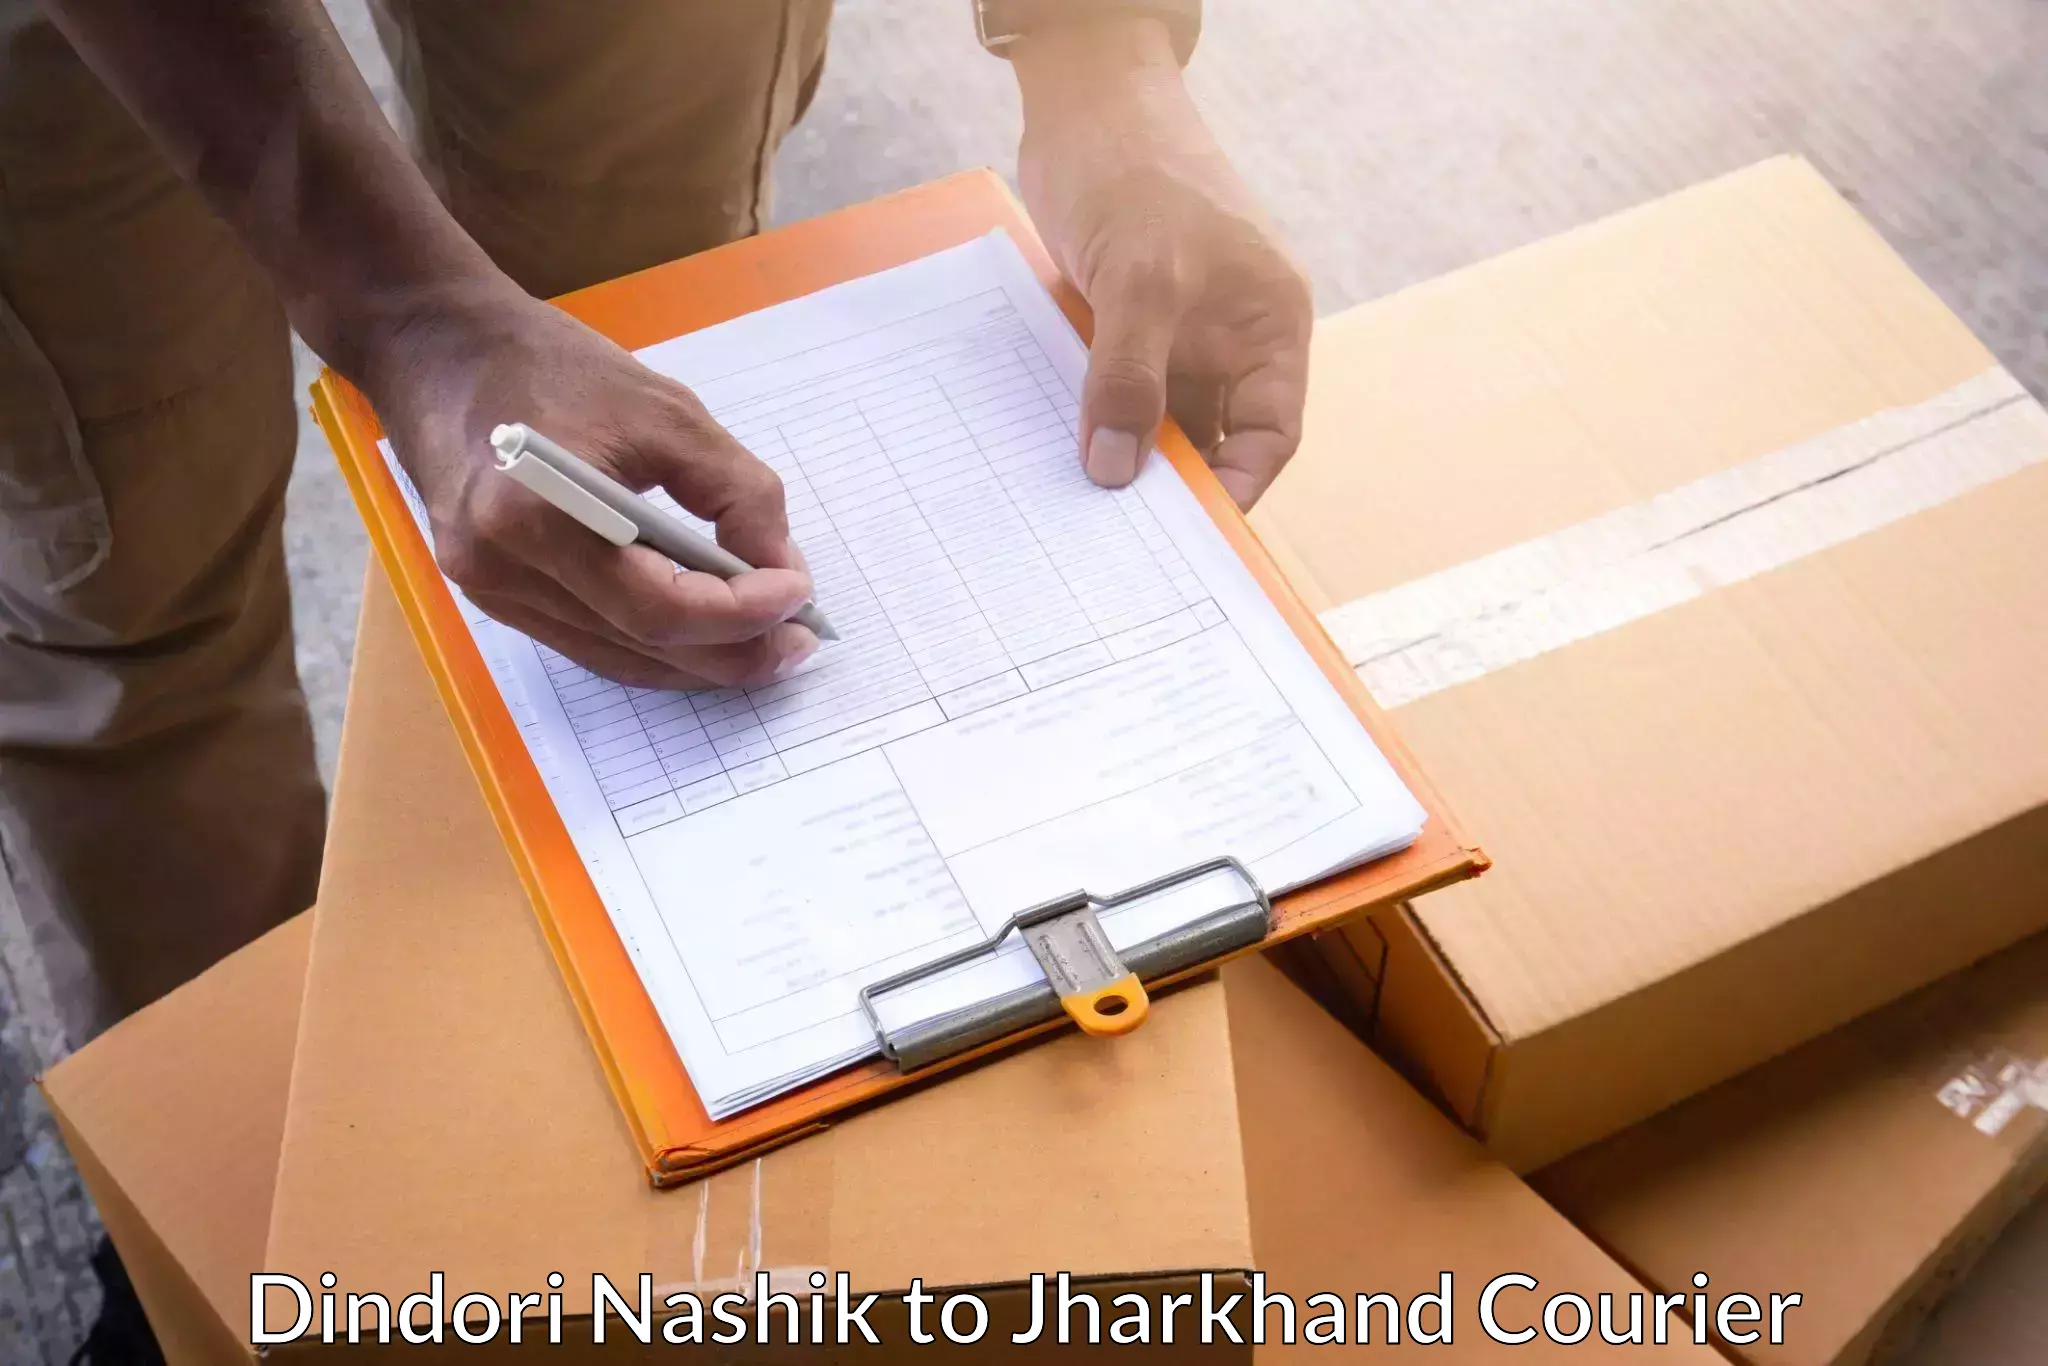 Fast delivery service Dindori Nashik to Dhanbad